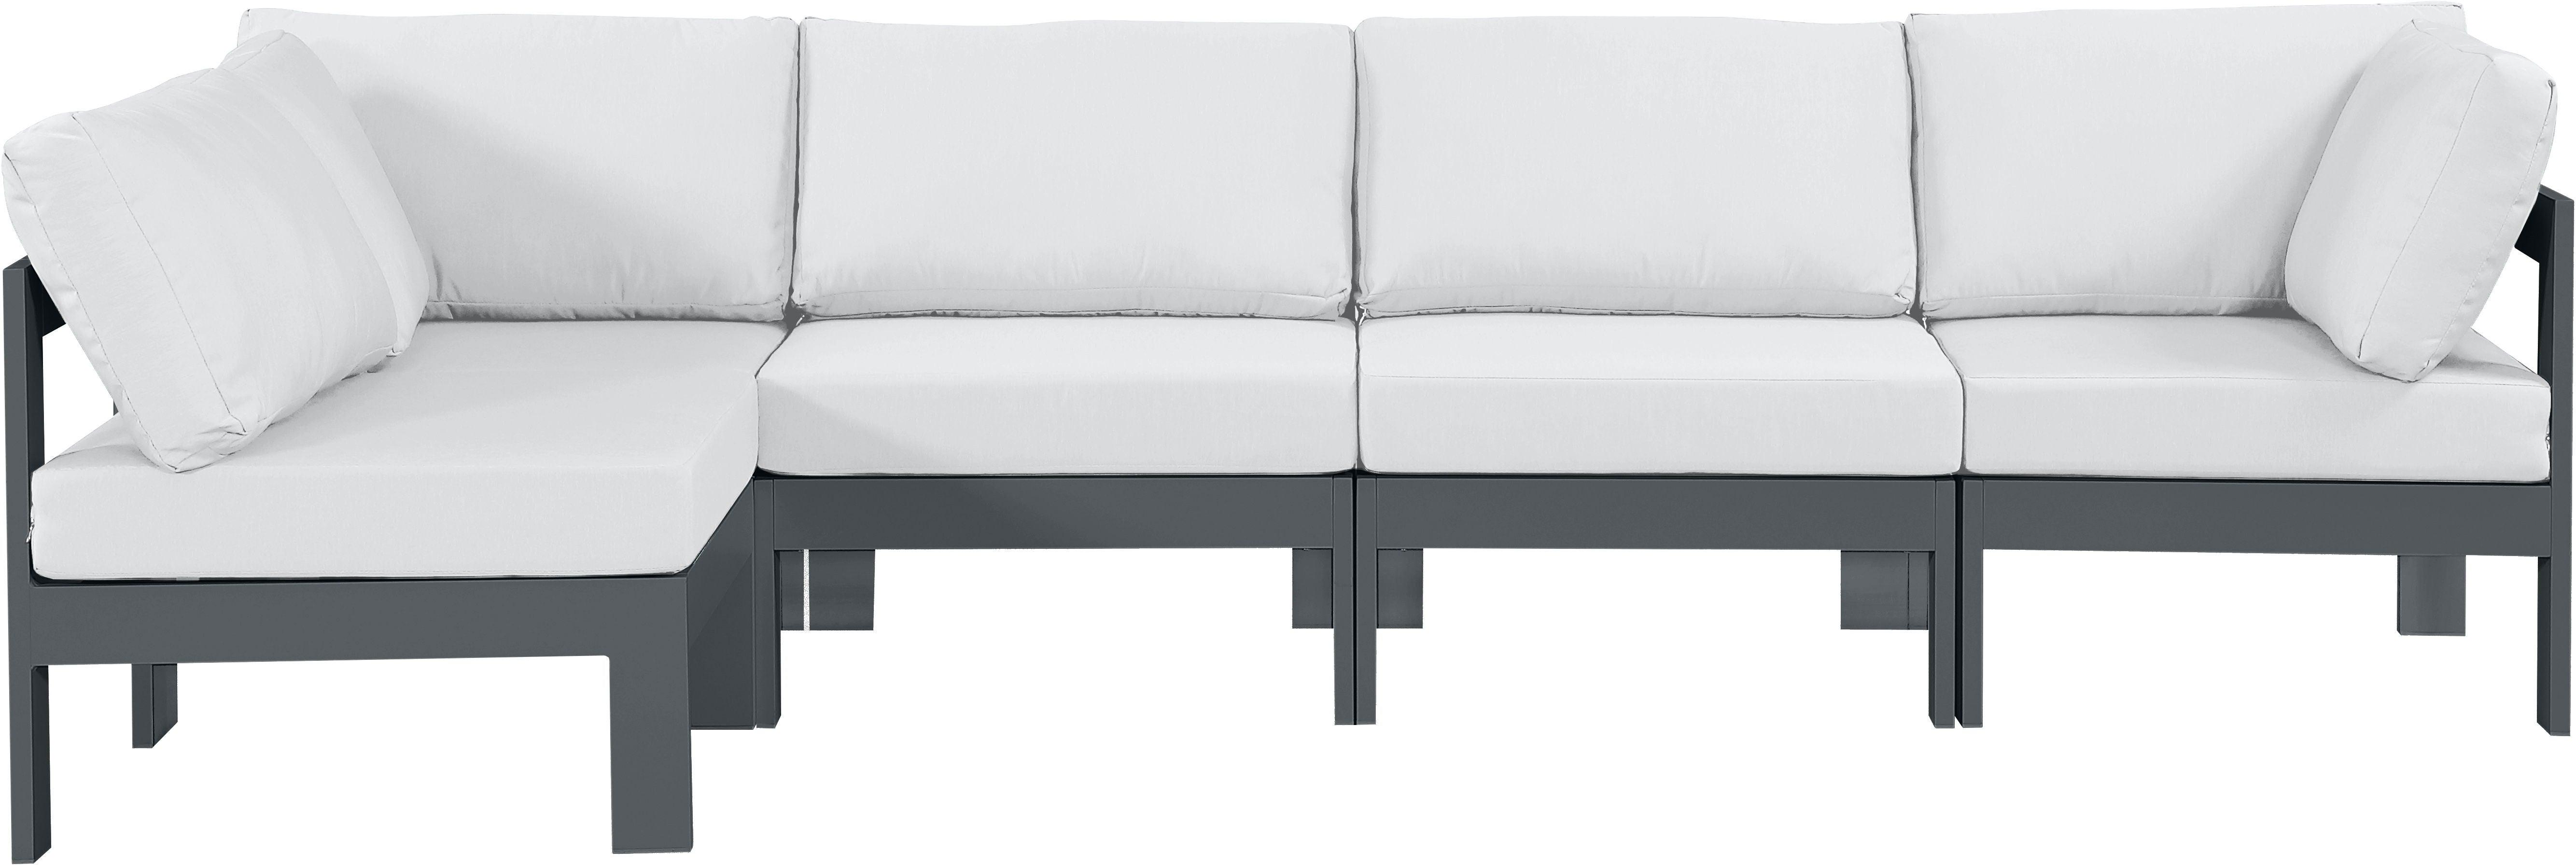 Meridian Furniture - Nizuc - Outdoor Patio Modular Sectional 5 Piece - White - Modern & Contemporary - 5th Avenue Furniture